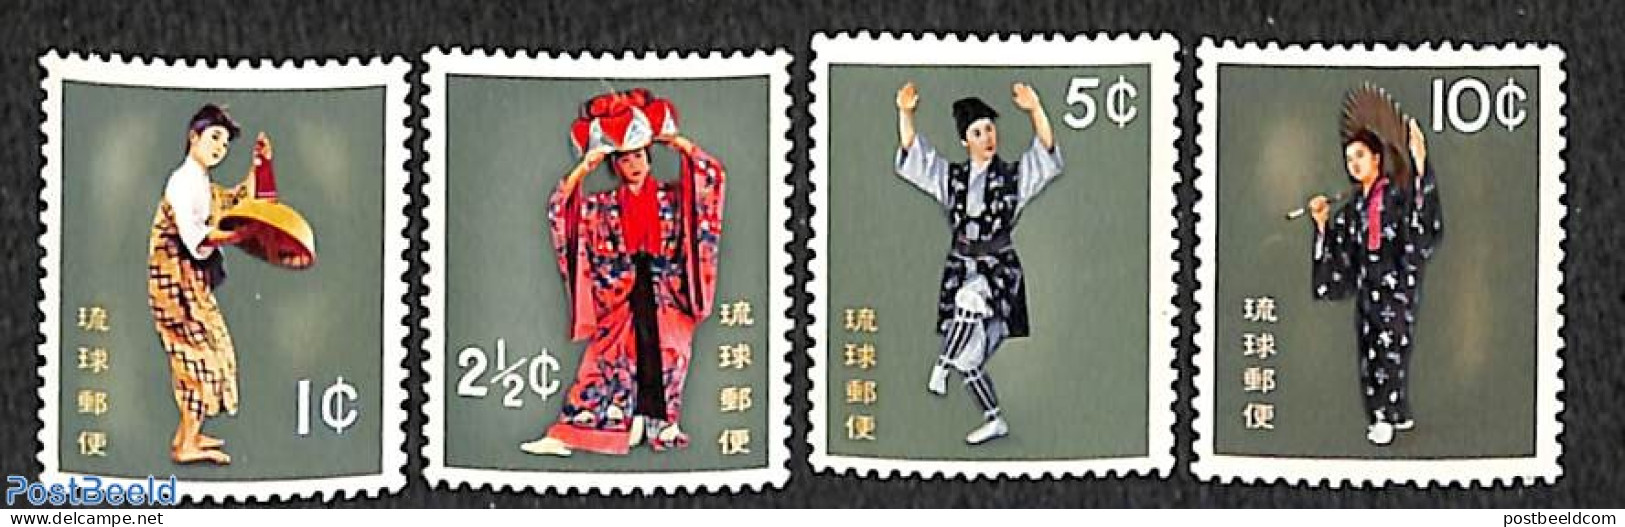 Ryu-Kyu 1960 Tradional Dances 4v, Mint NH, Performance Art - Various - Dance & Ballet - Folklore - Baile